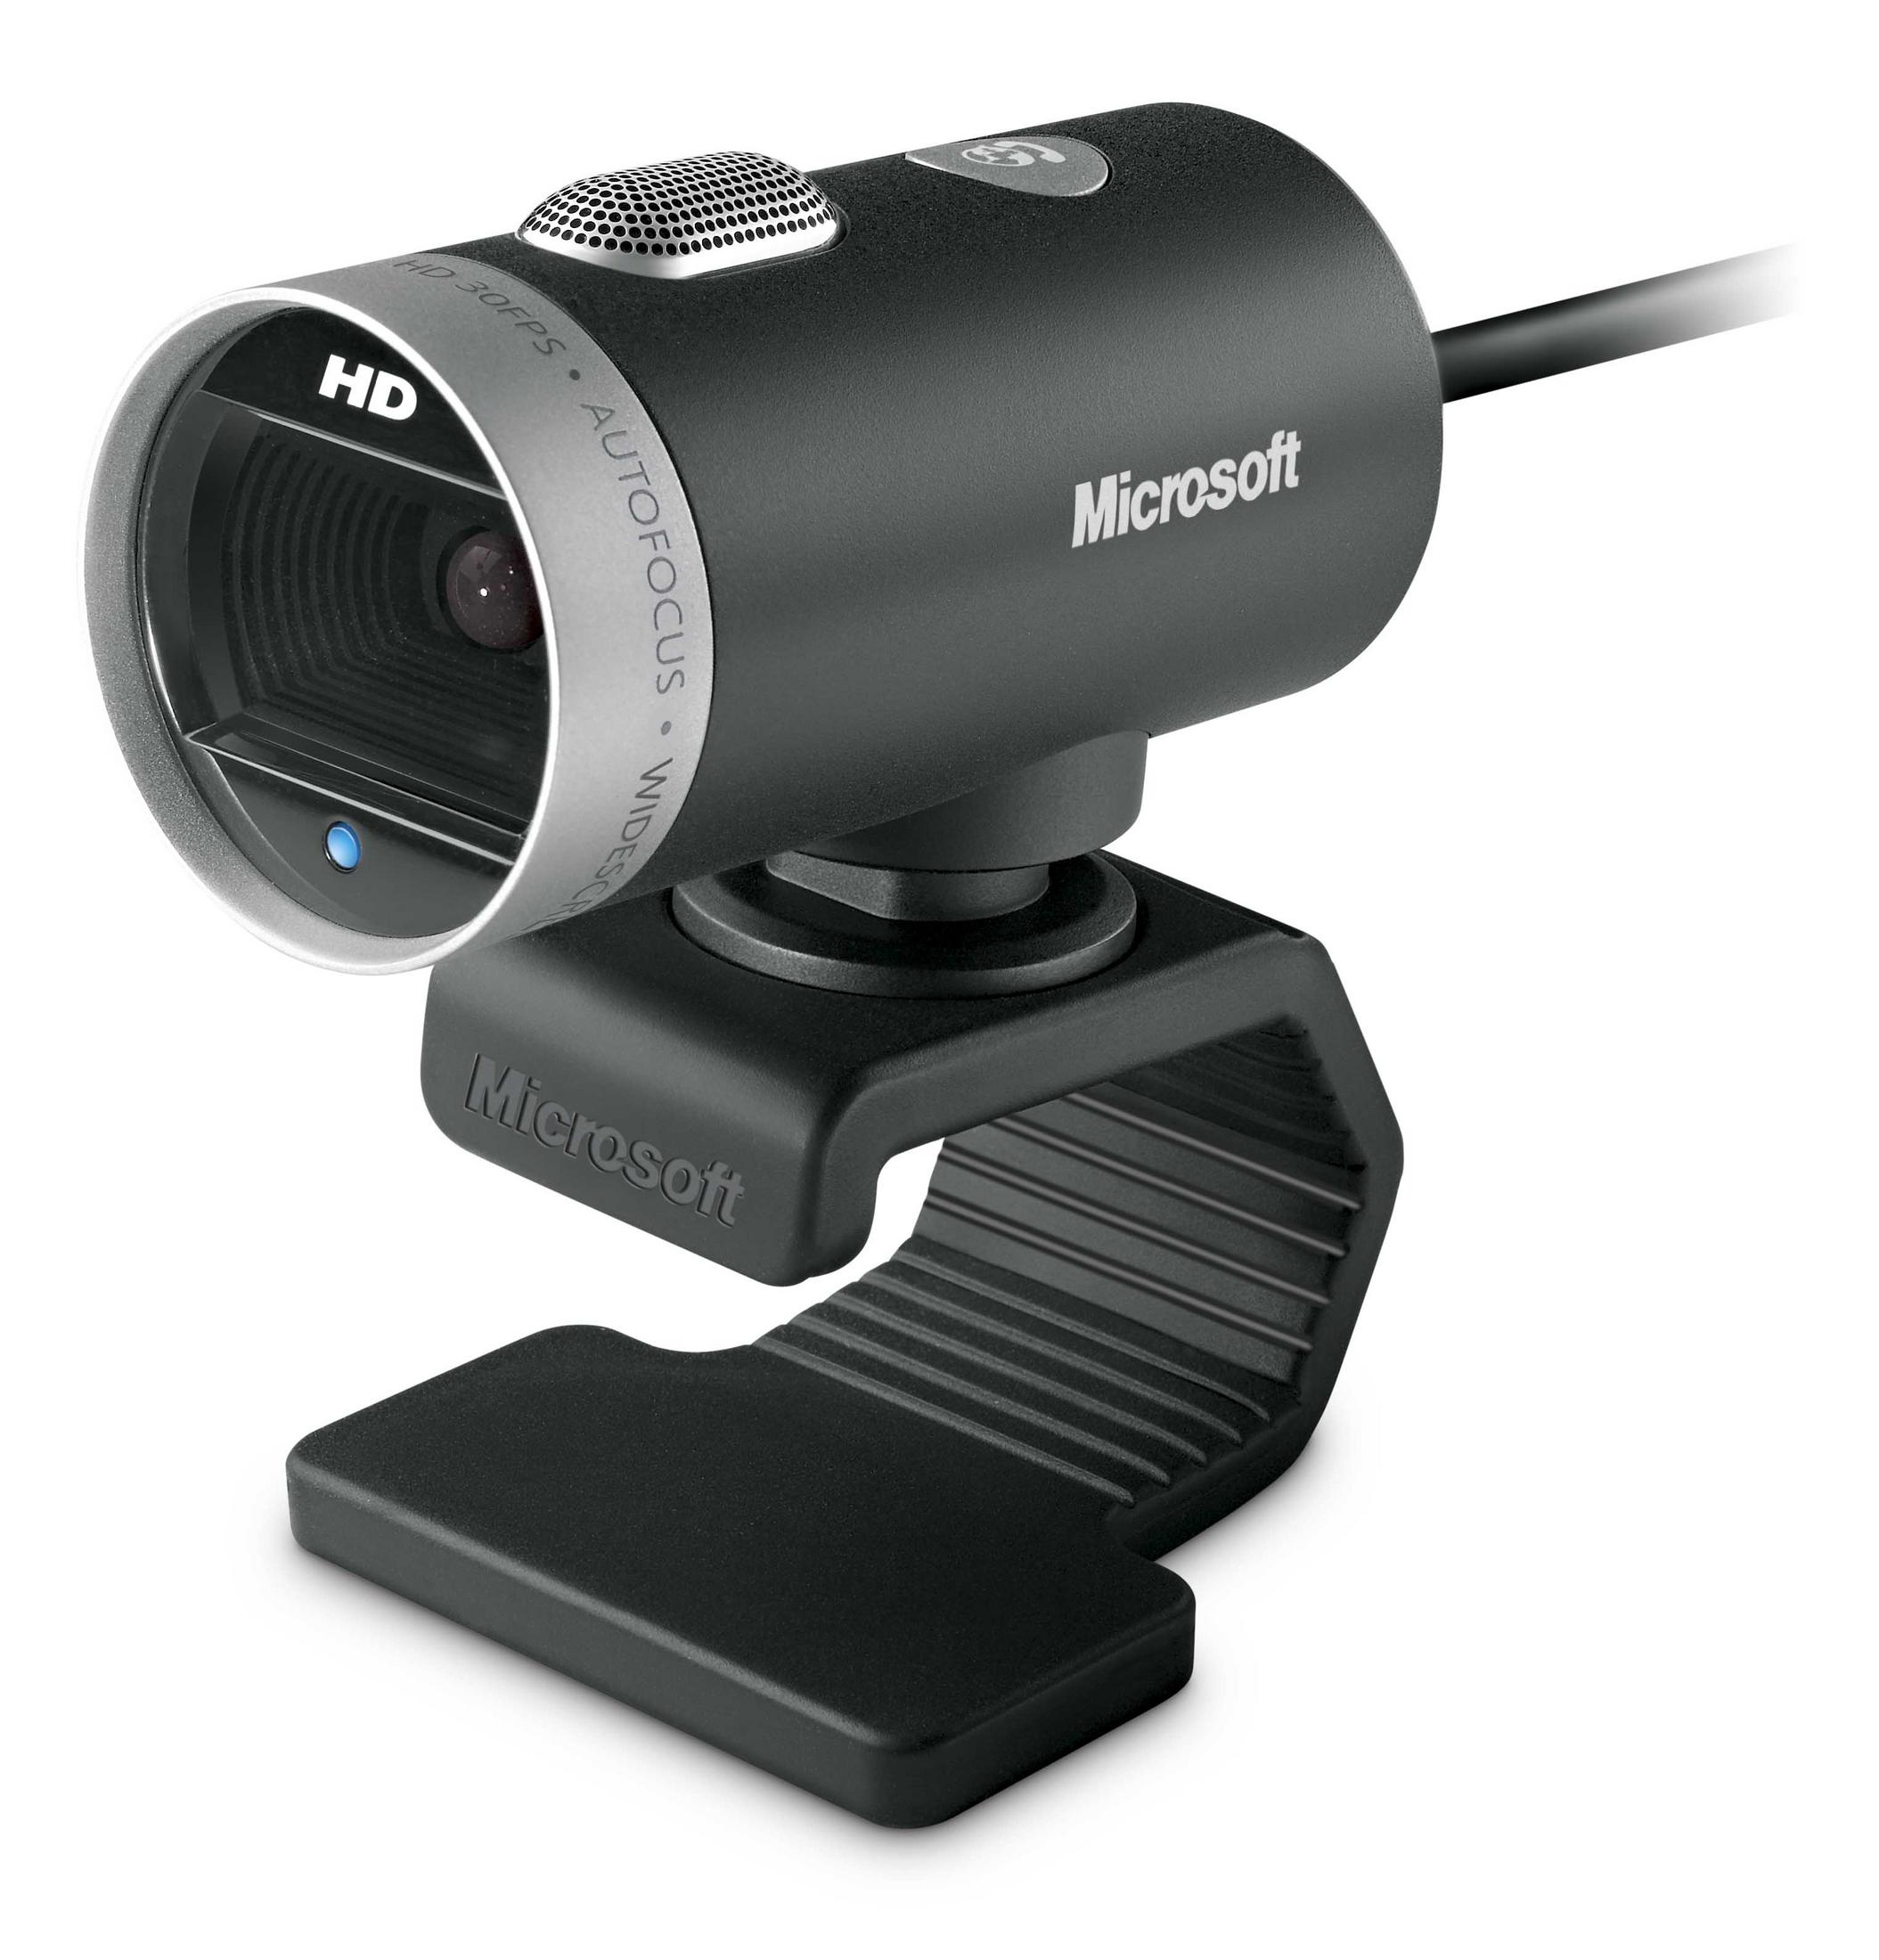 WIN MICROSOFT H5D-00014 CINEMA LIFECAM USB PORT Webcam